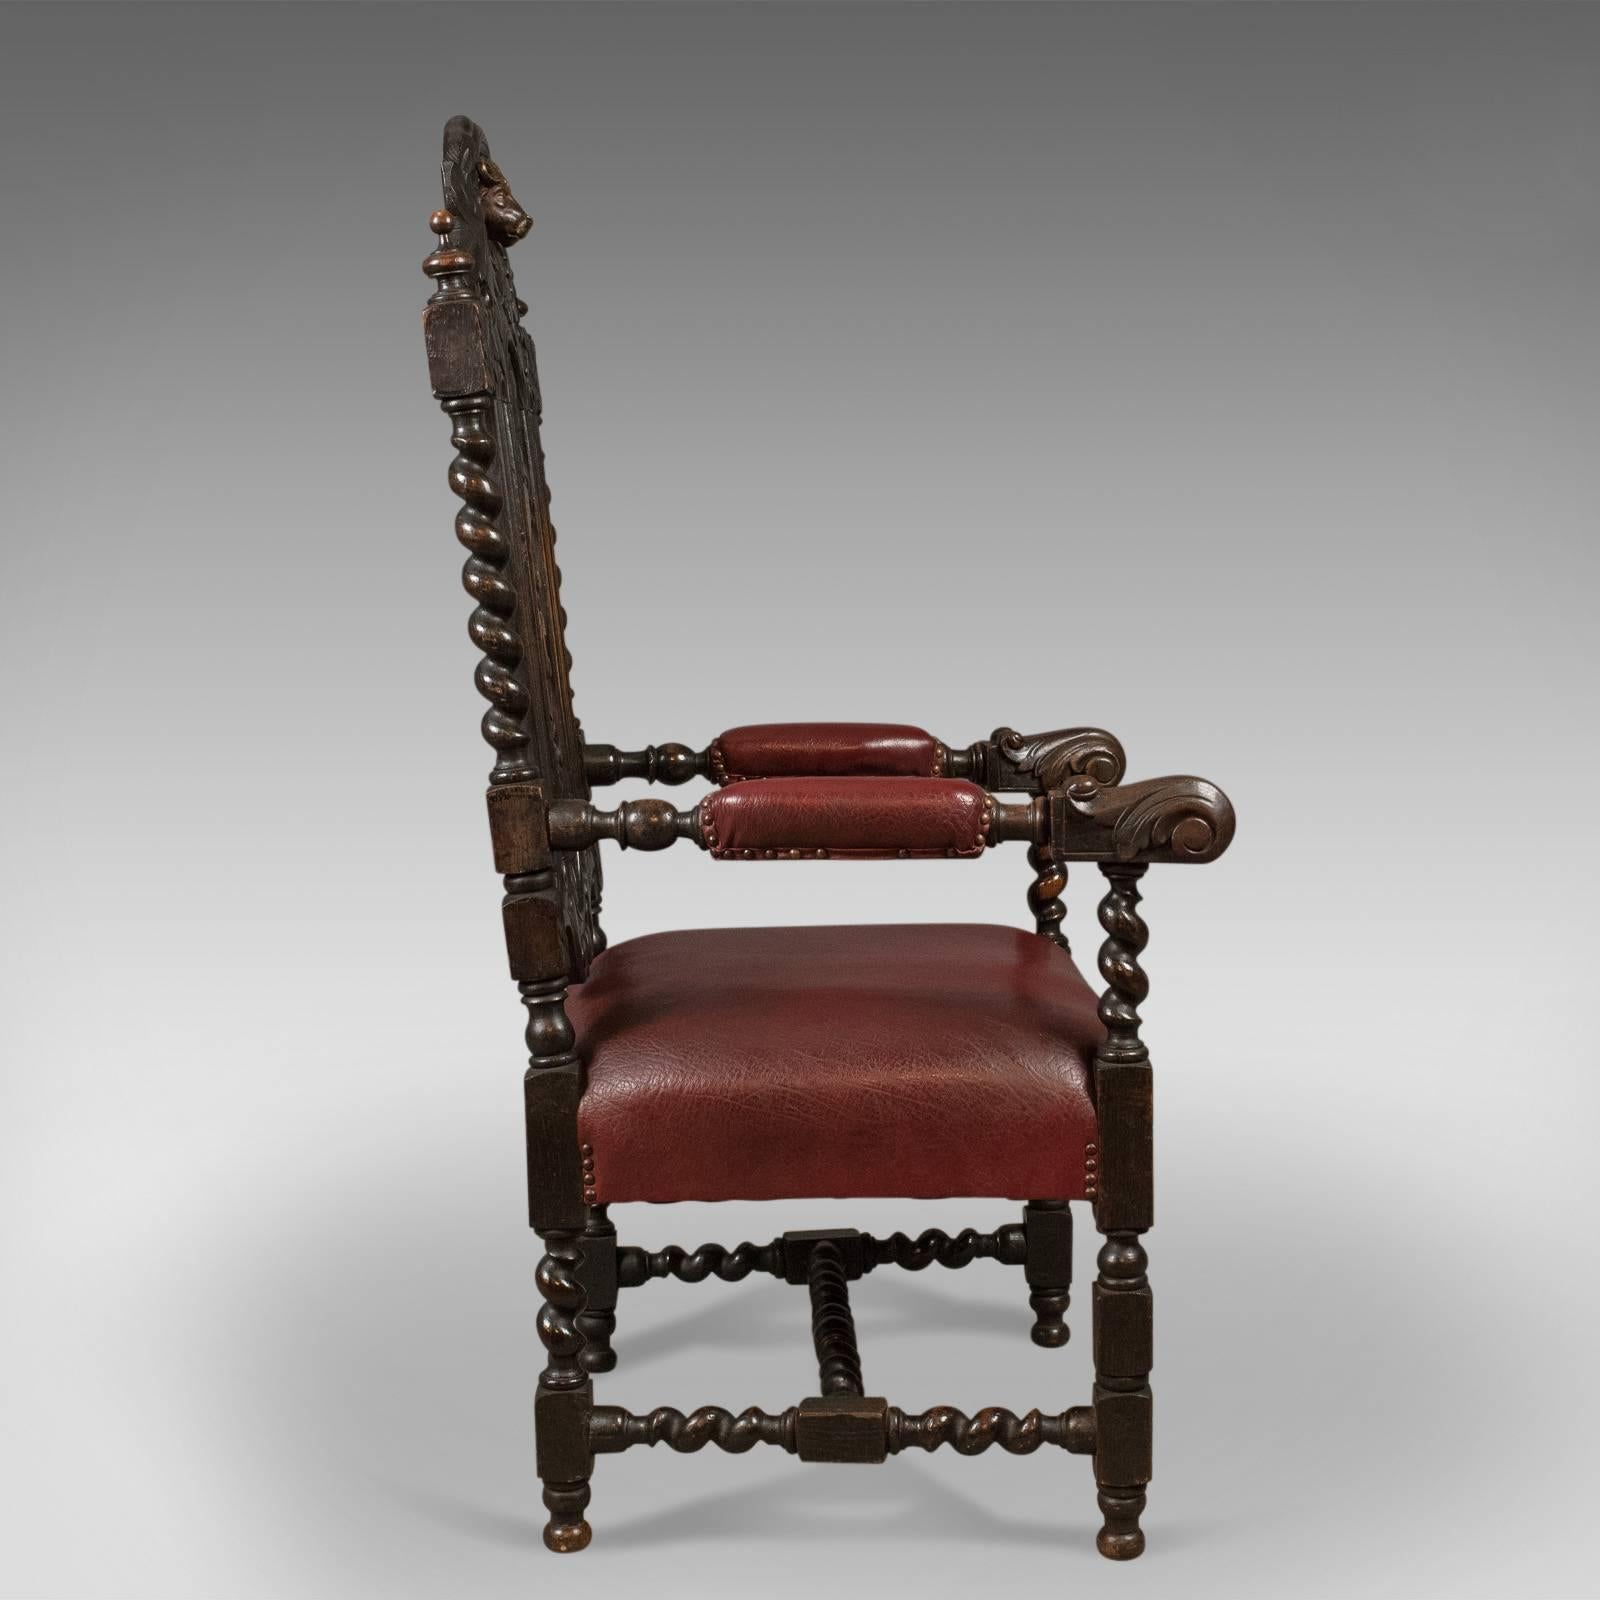 Gothic Revival Antique Lodge Chair, 1913